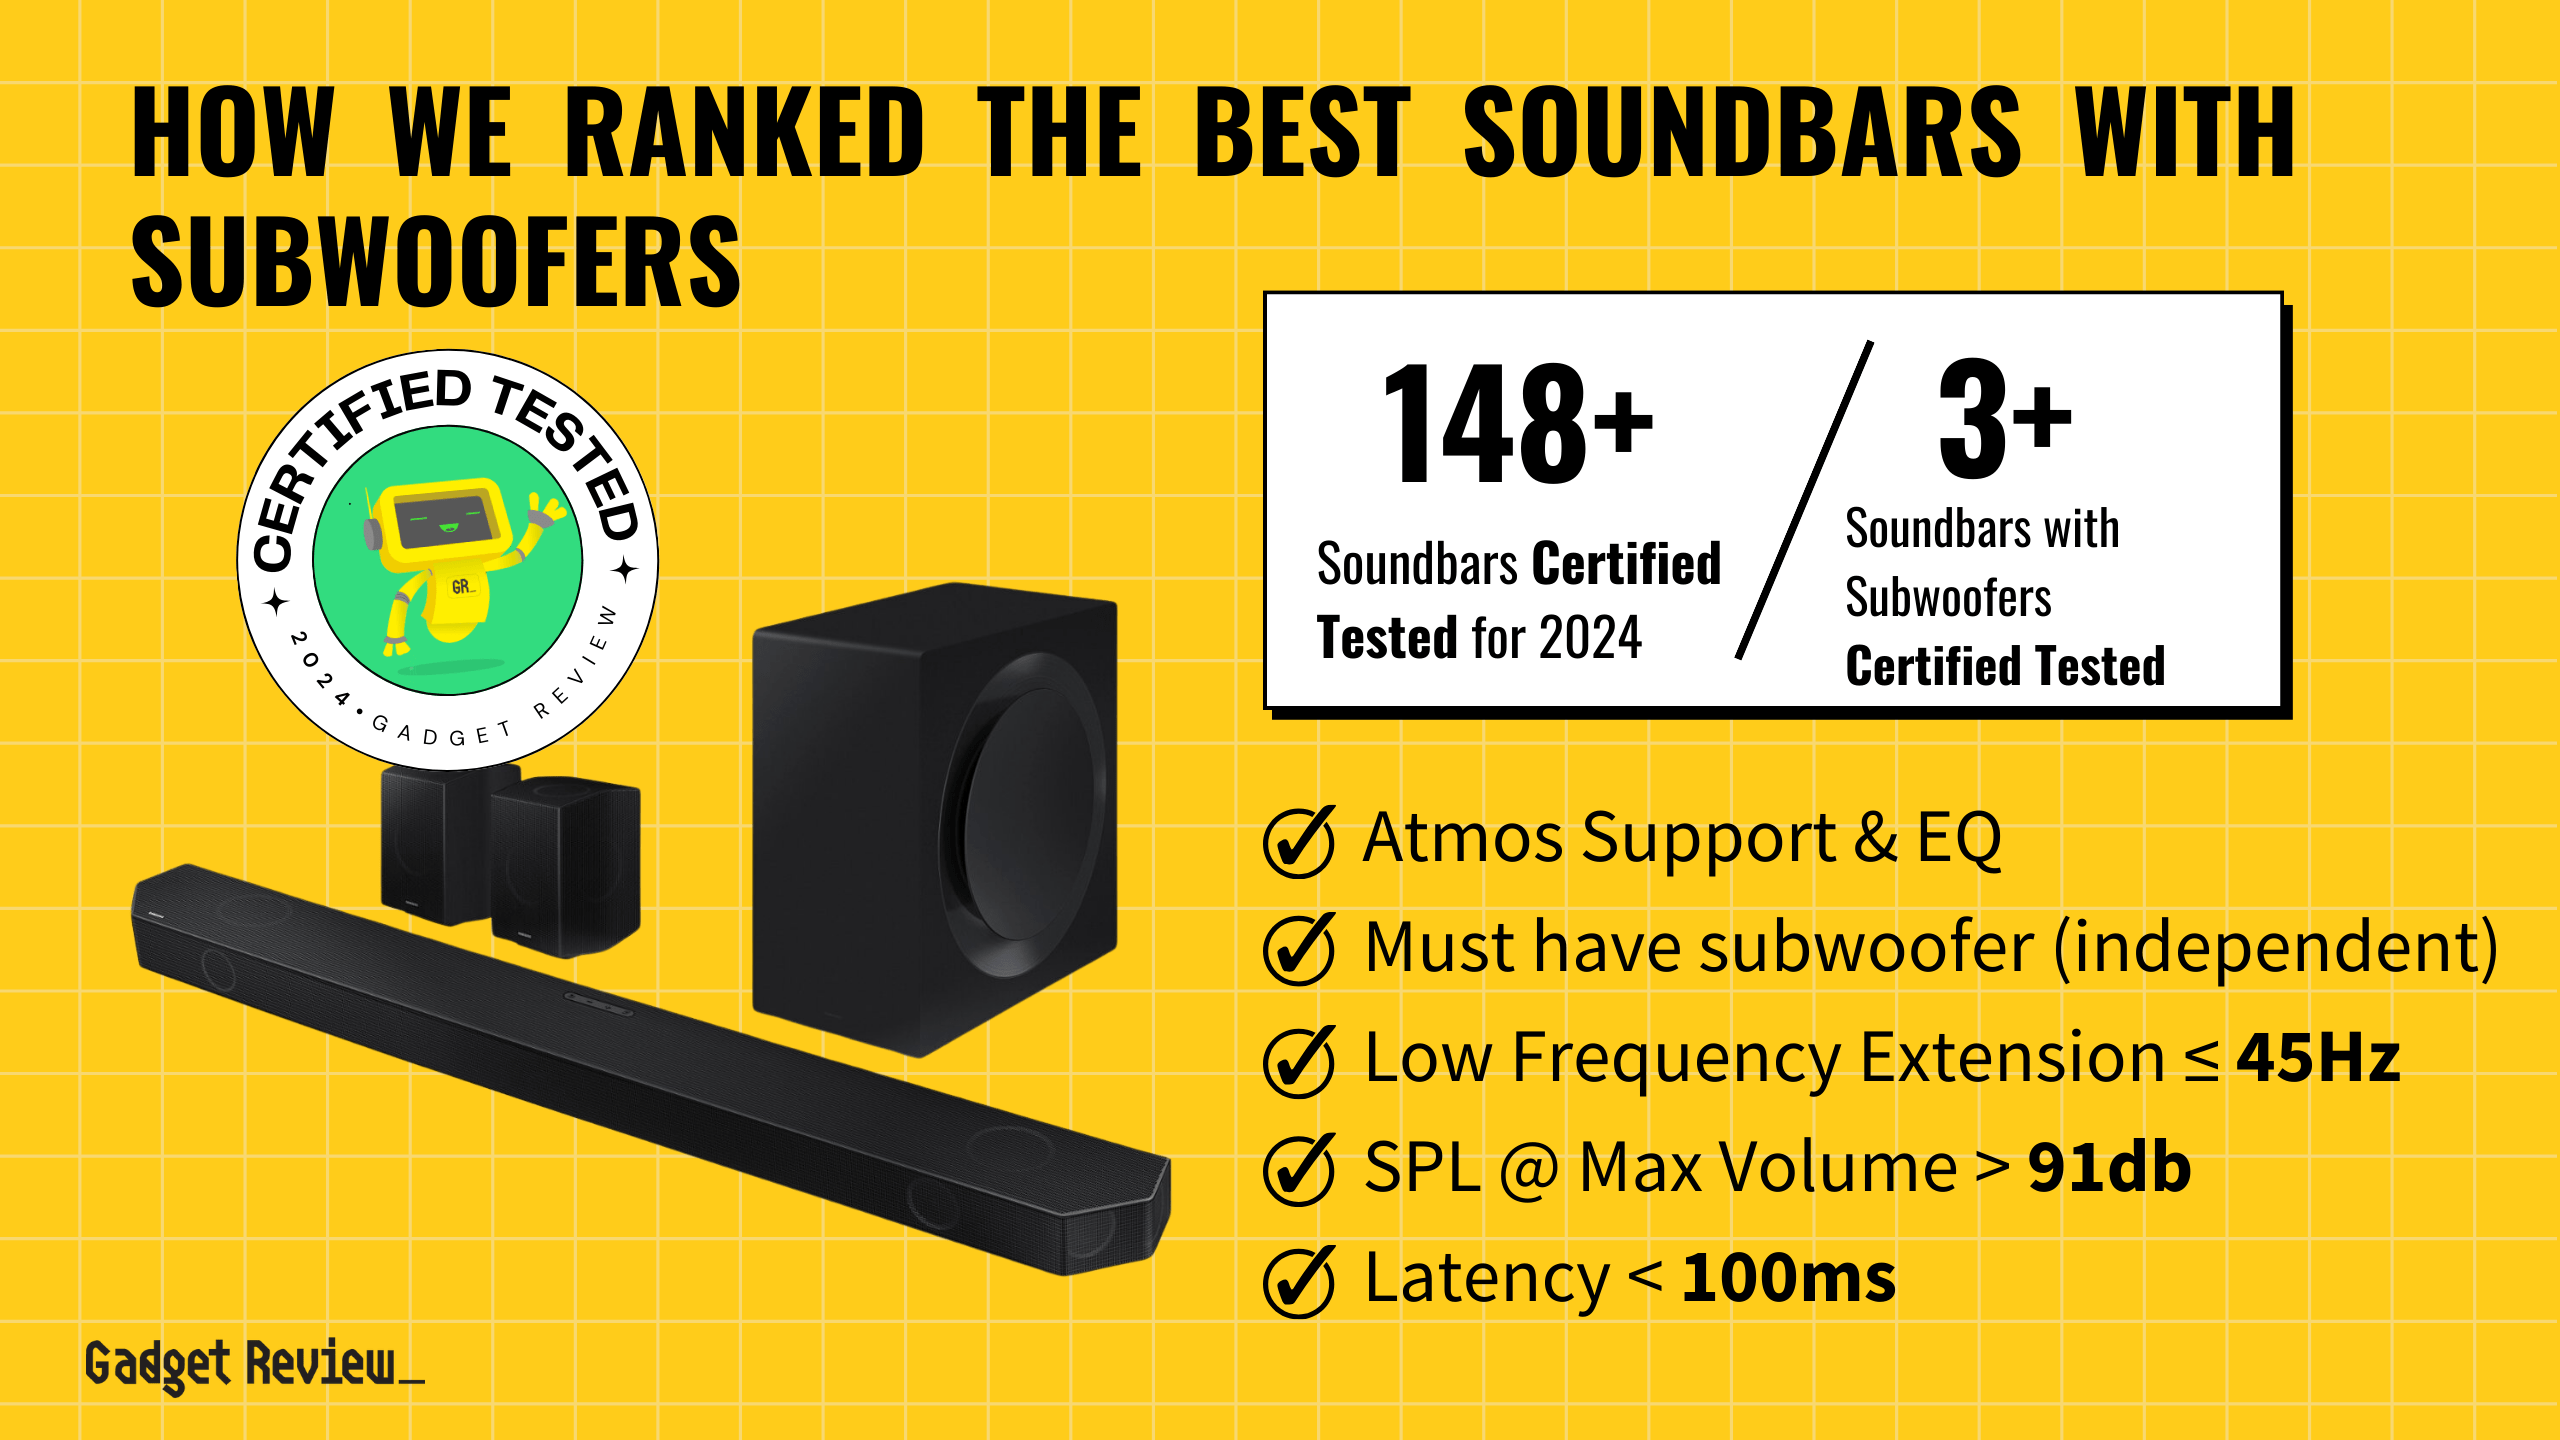 best soundbar with subwoofer guide that shows the top best soundbar model